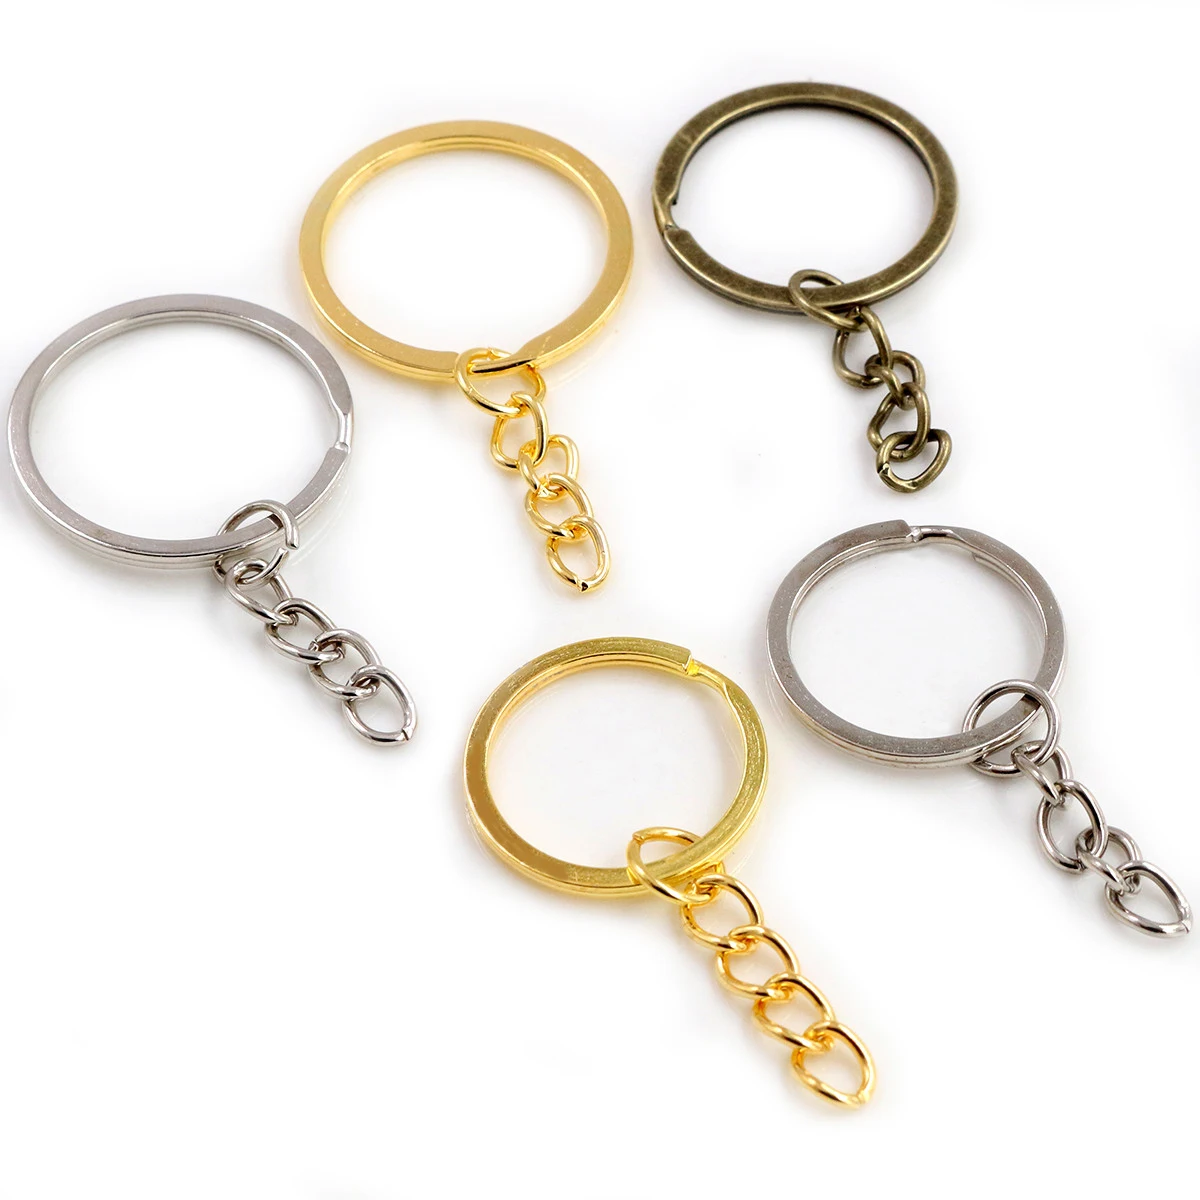 20/30 pcs/lot Key Chain Key Ring Bronze Rhodium Gold Color 28mm Long Round  Split Keyrings Keychain Jewelry Making Wholesale